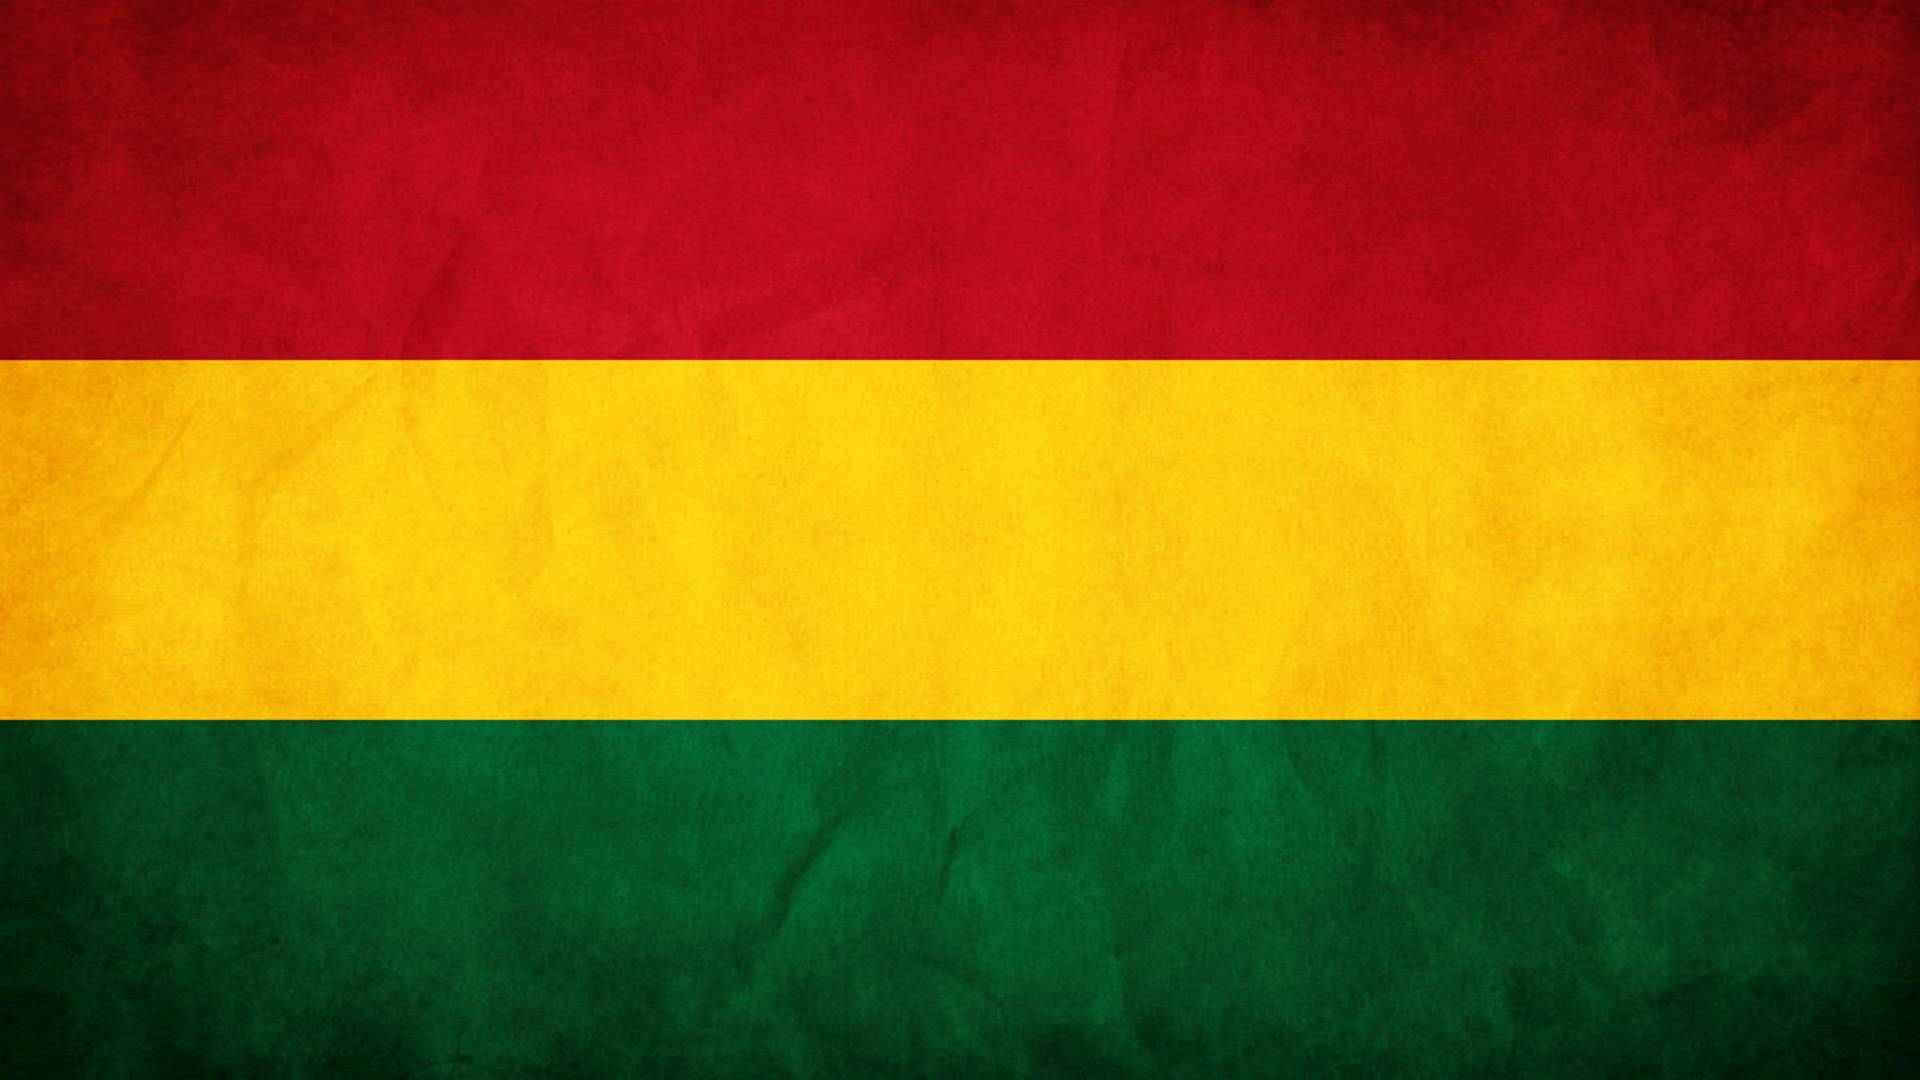 Bolivia National Anthem - 8-bit version - YouTube